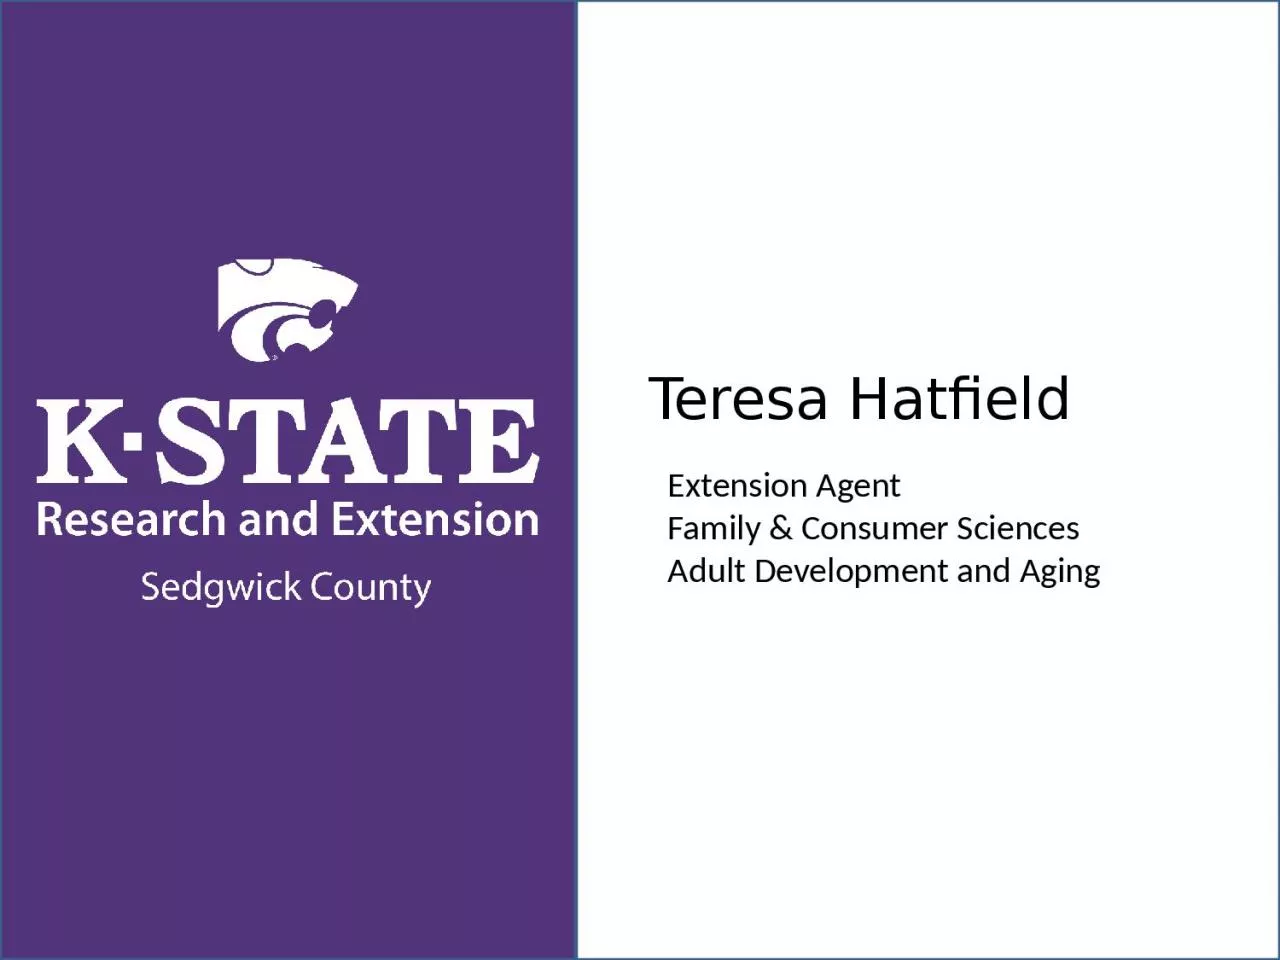 Teresa Hatfield Extension Agent